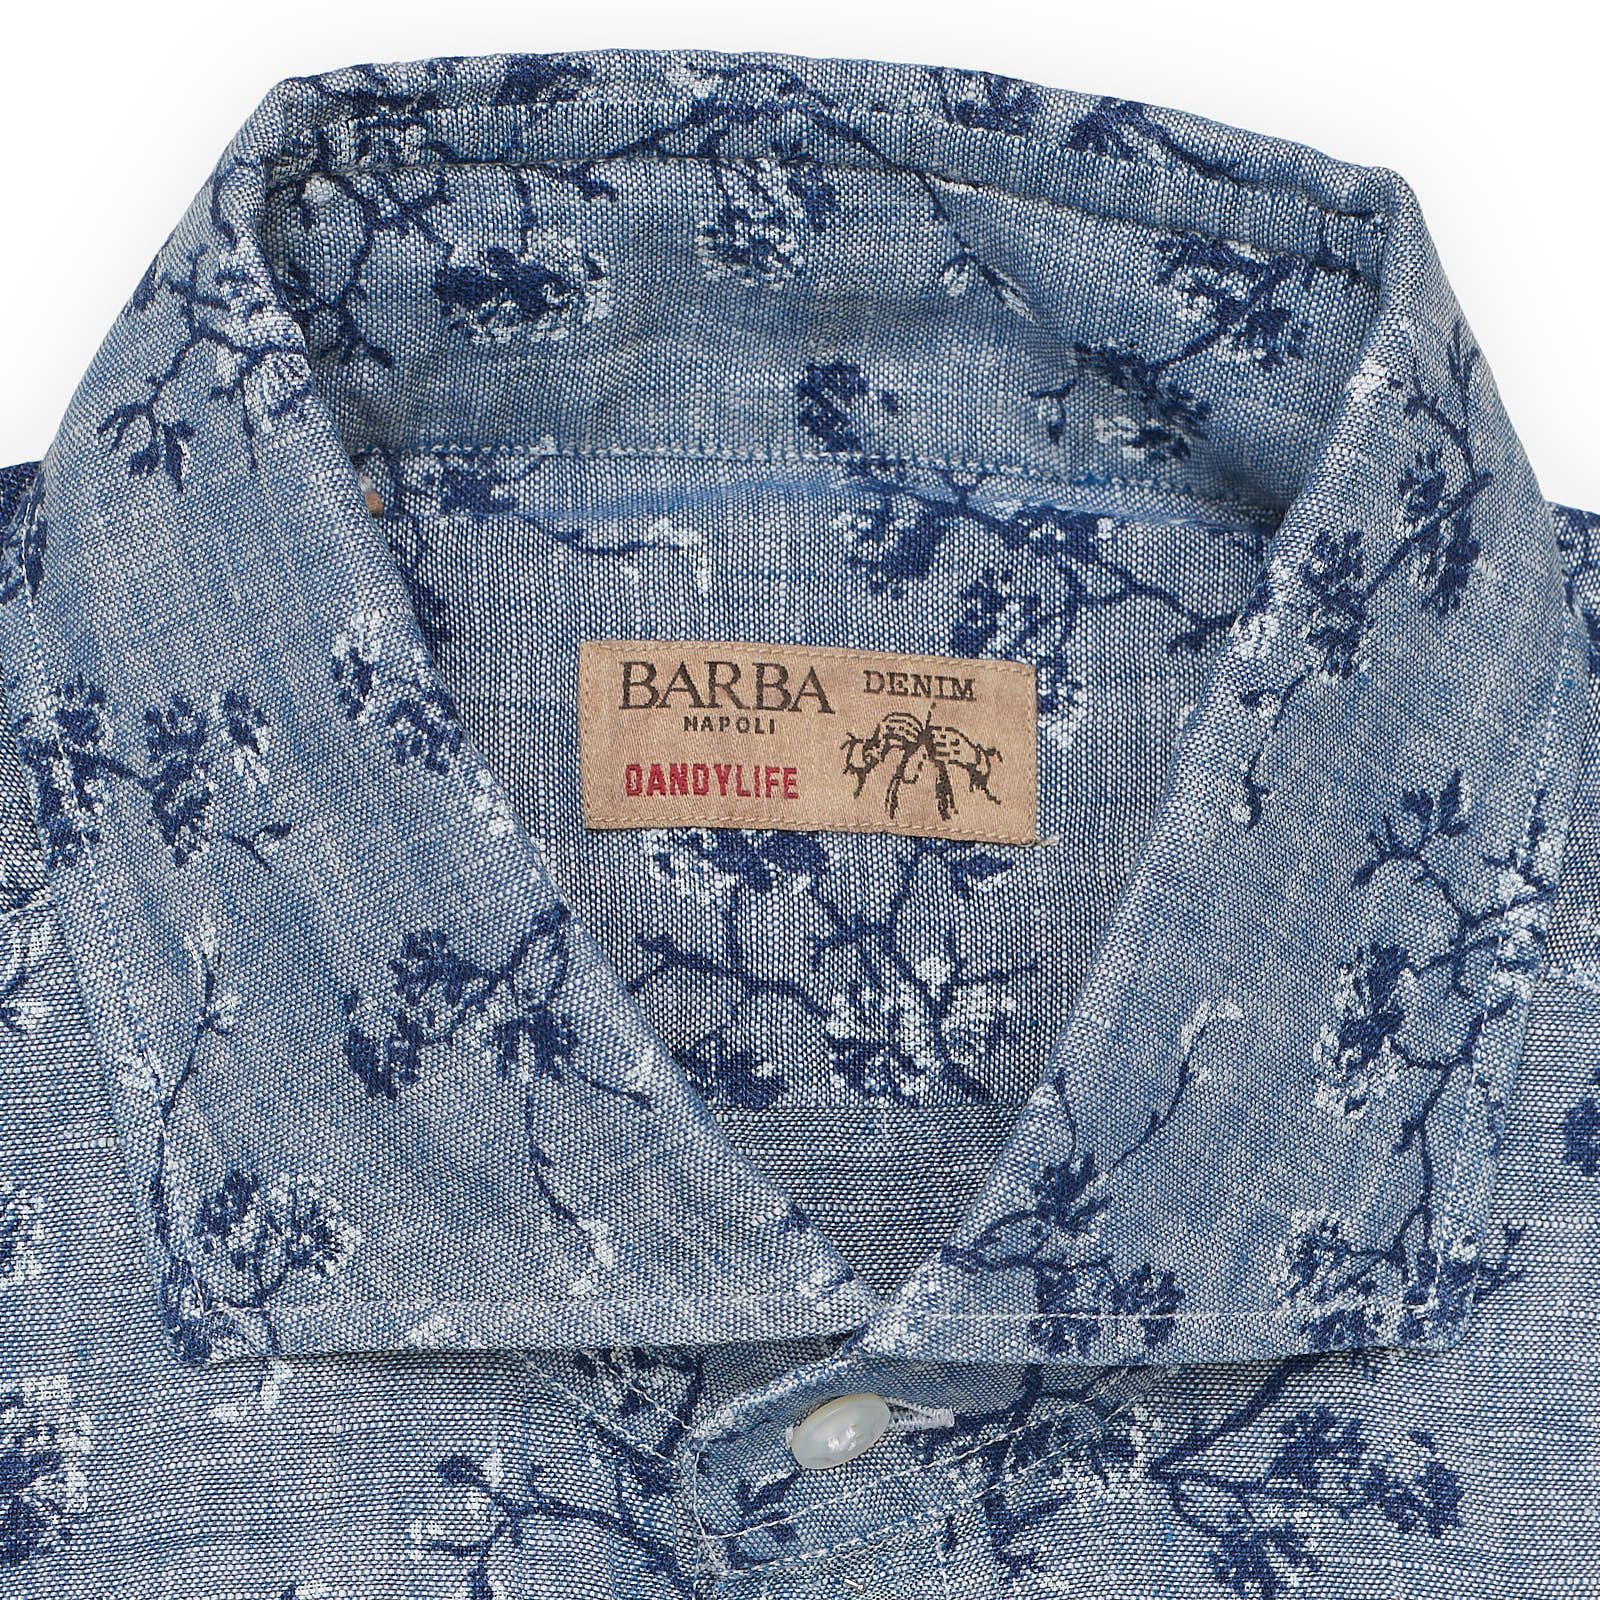 BARBA Dandylife Denim Blue Floral Linen Shirt EU 40 NEW US 15.75